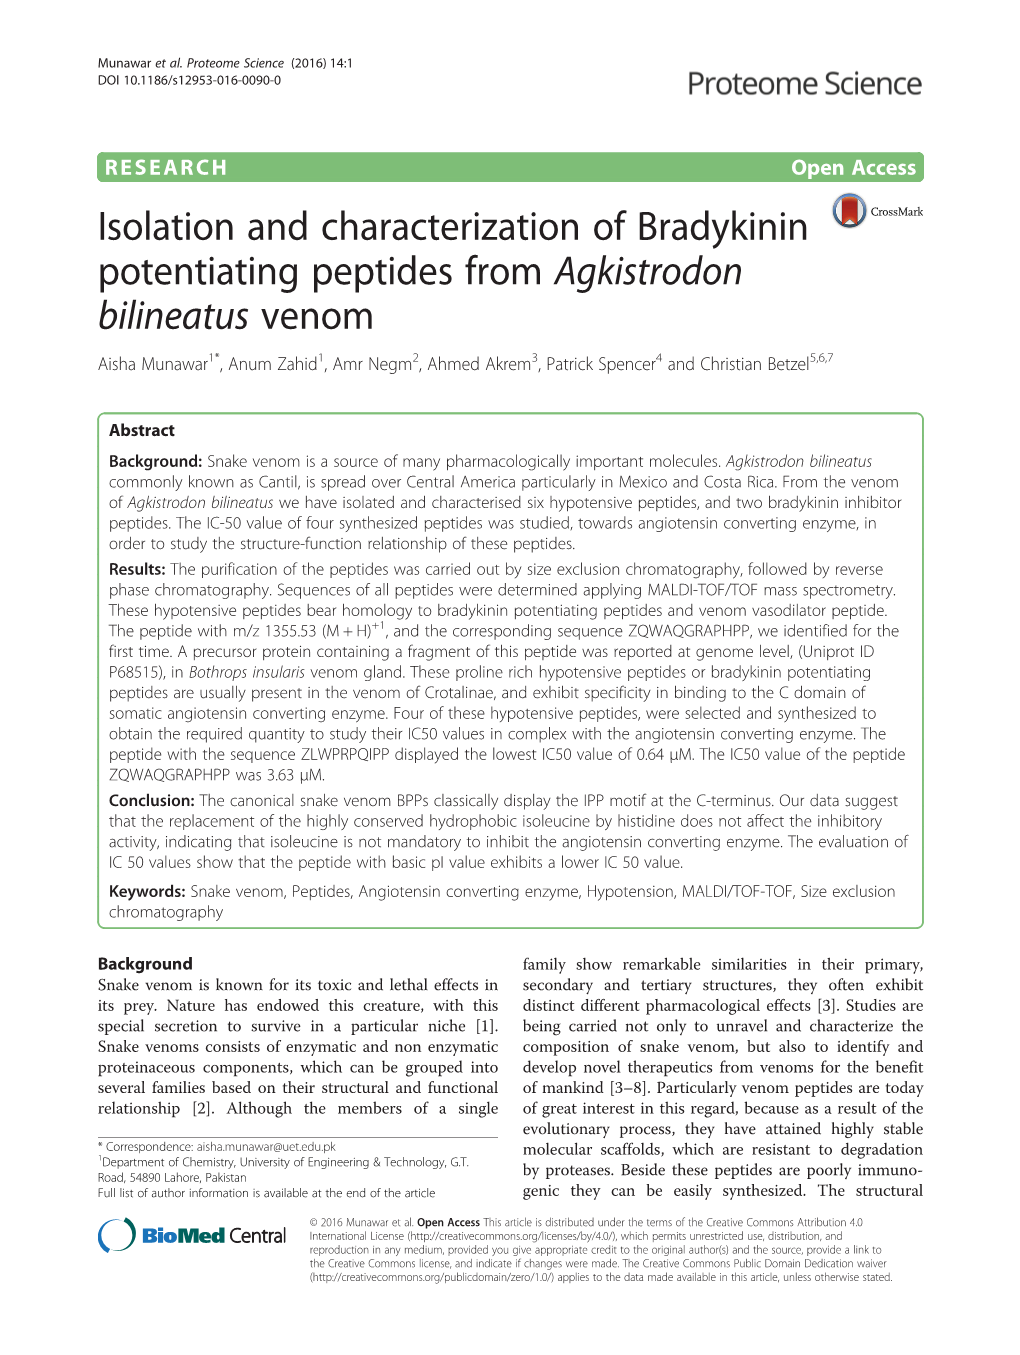 Isolation and Characterization of Bradykinin Potentiating Peptides